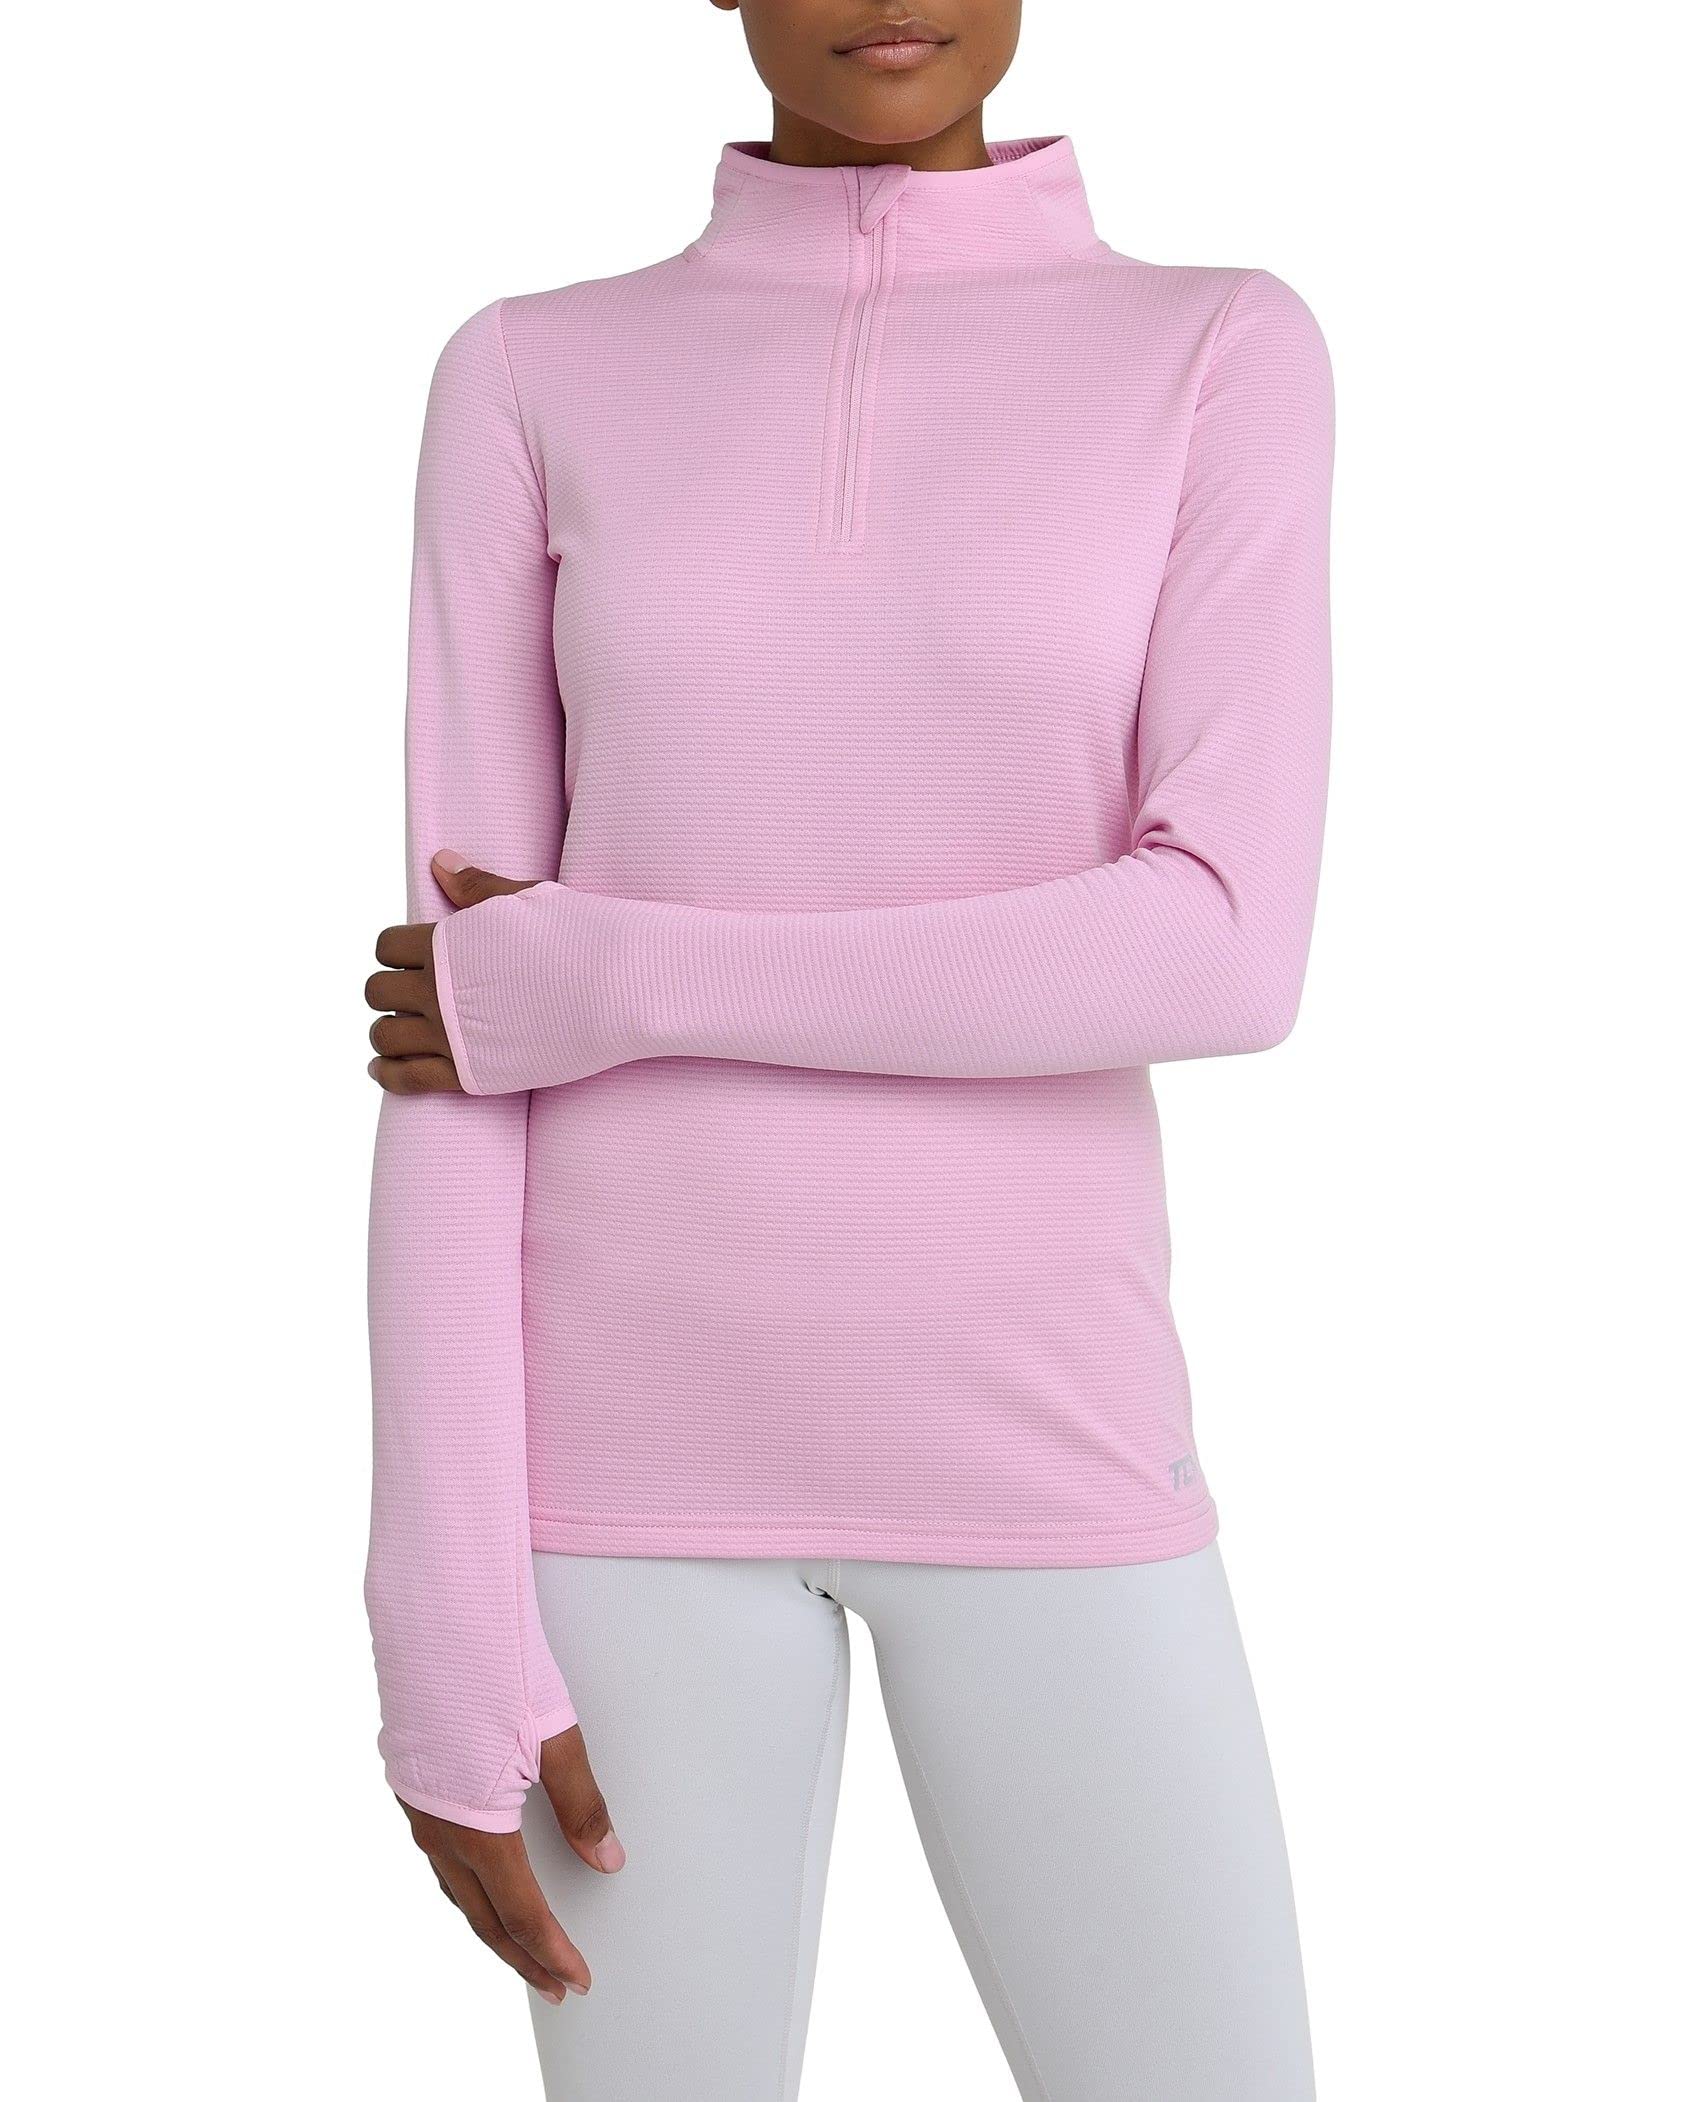 TCA Damen Sport Shirt Langarm Laufshirt 1/2 Reißverschluss Fitness Yoga Langarmshirts - Lila, XS